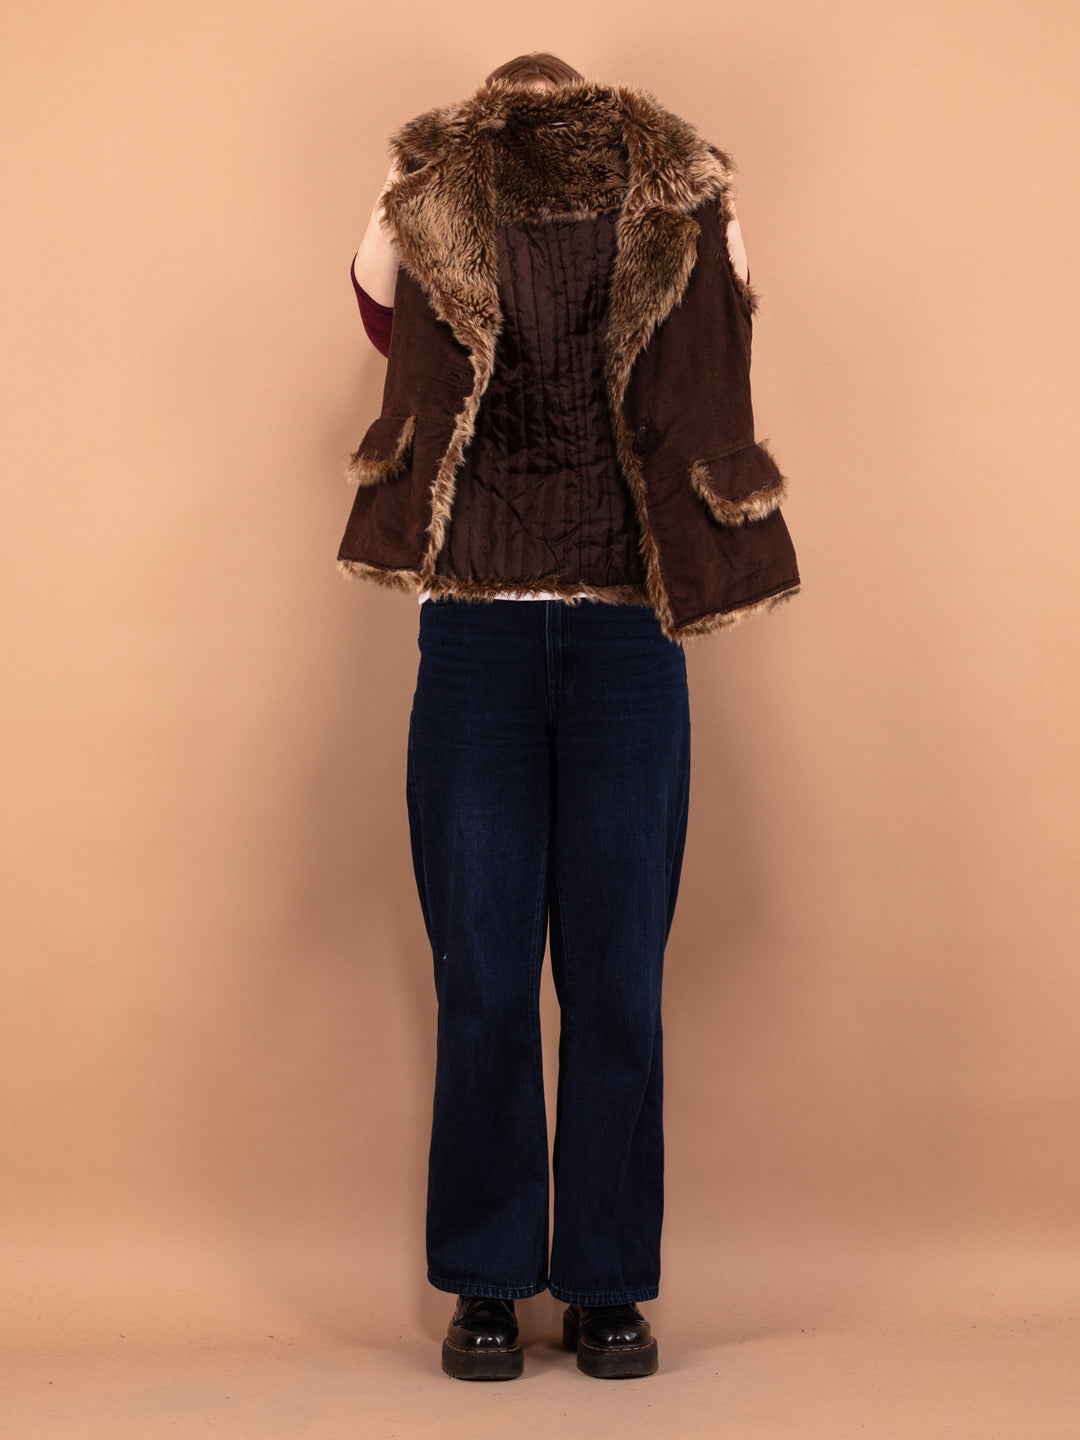 00s Faux Sheepskin Vest, Size XS Small, Women Boho Sherpa Vest, Faux Fur Trim Gilet, Sleeveless Jacket, Vintage Y2K Style Boho Fashion